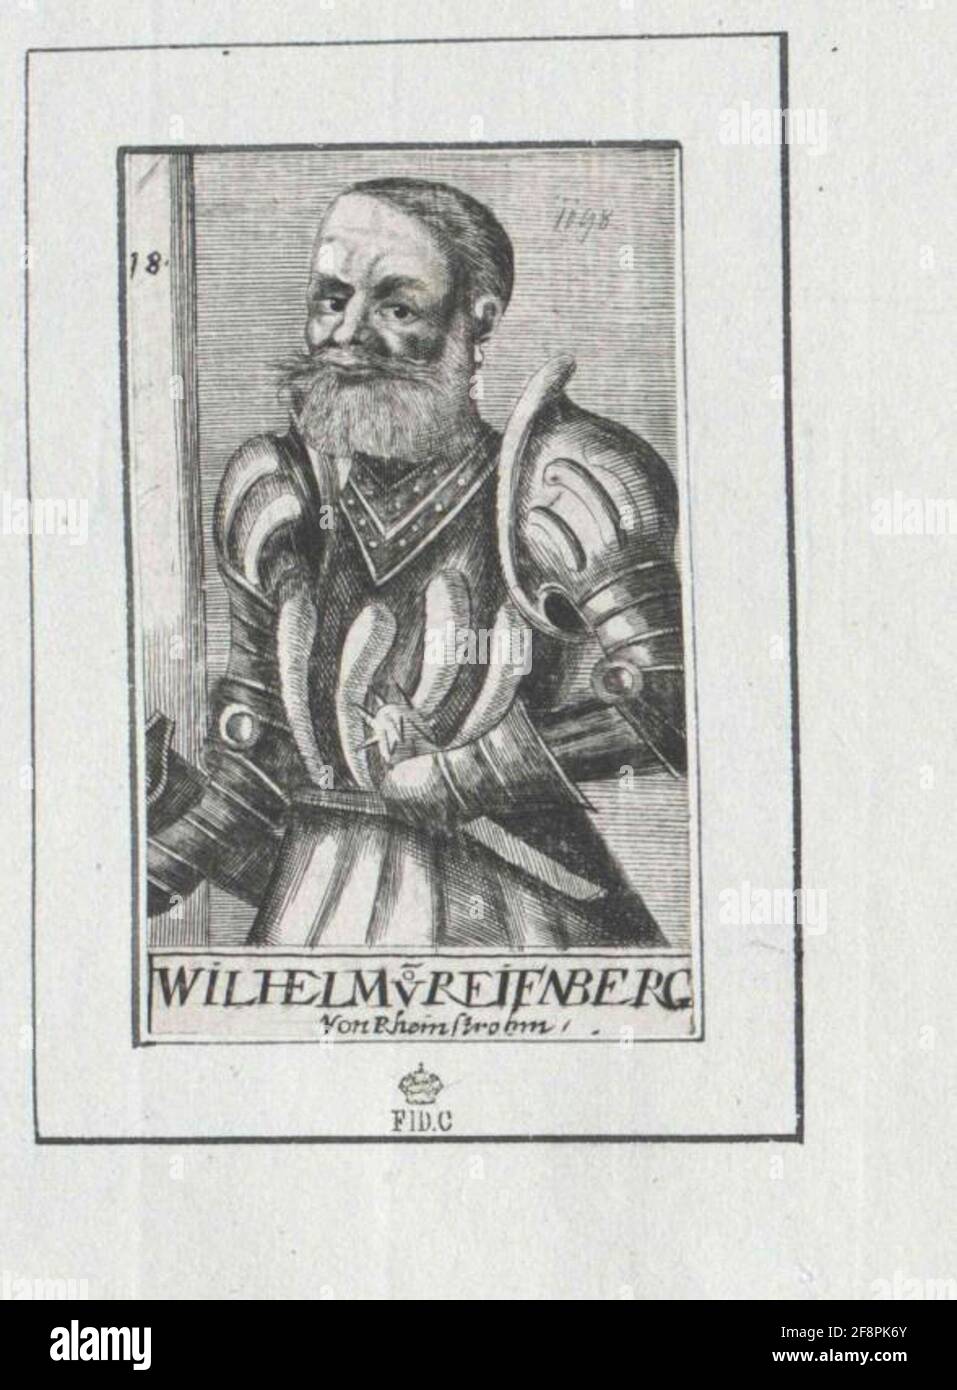 Reifenberg, Wilhelm of. Stock Photo